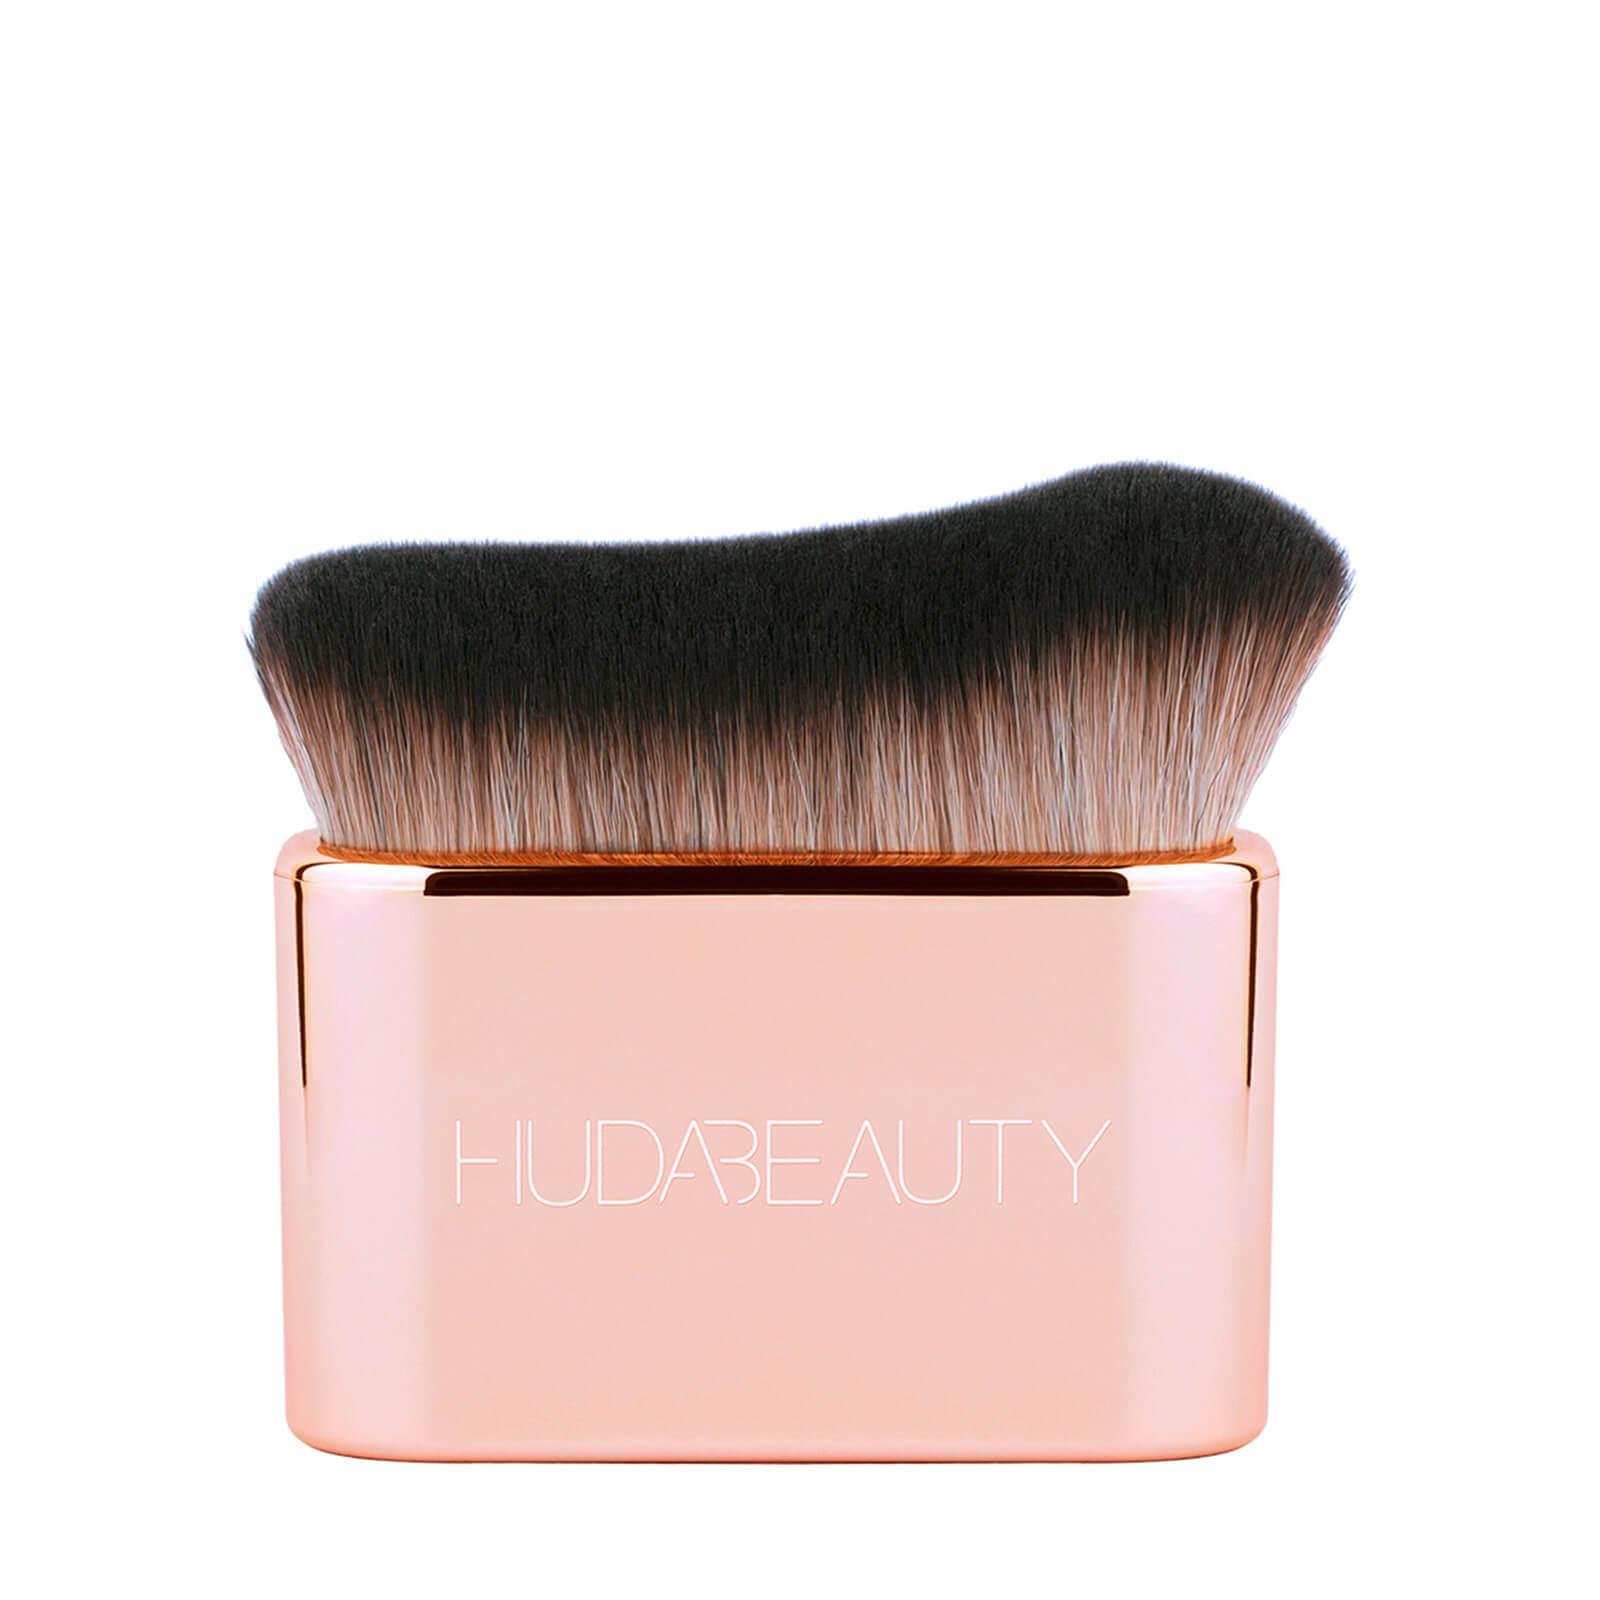 Huda Beauty N.Y.M.P.H Body Blur & Glow Brush